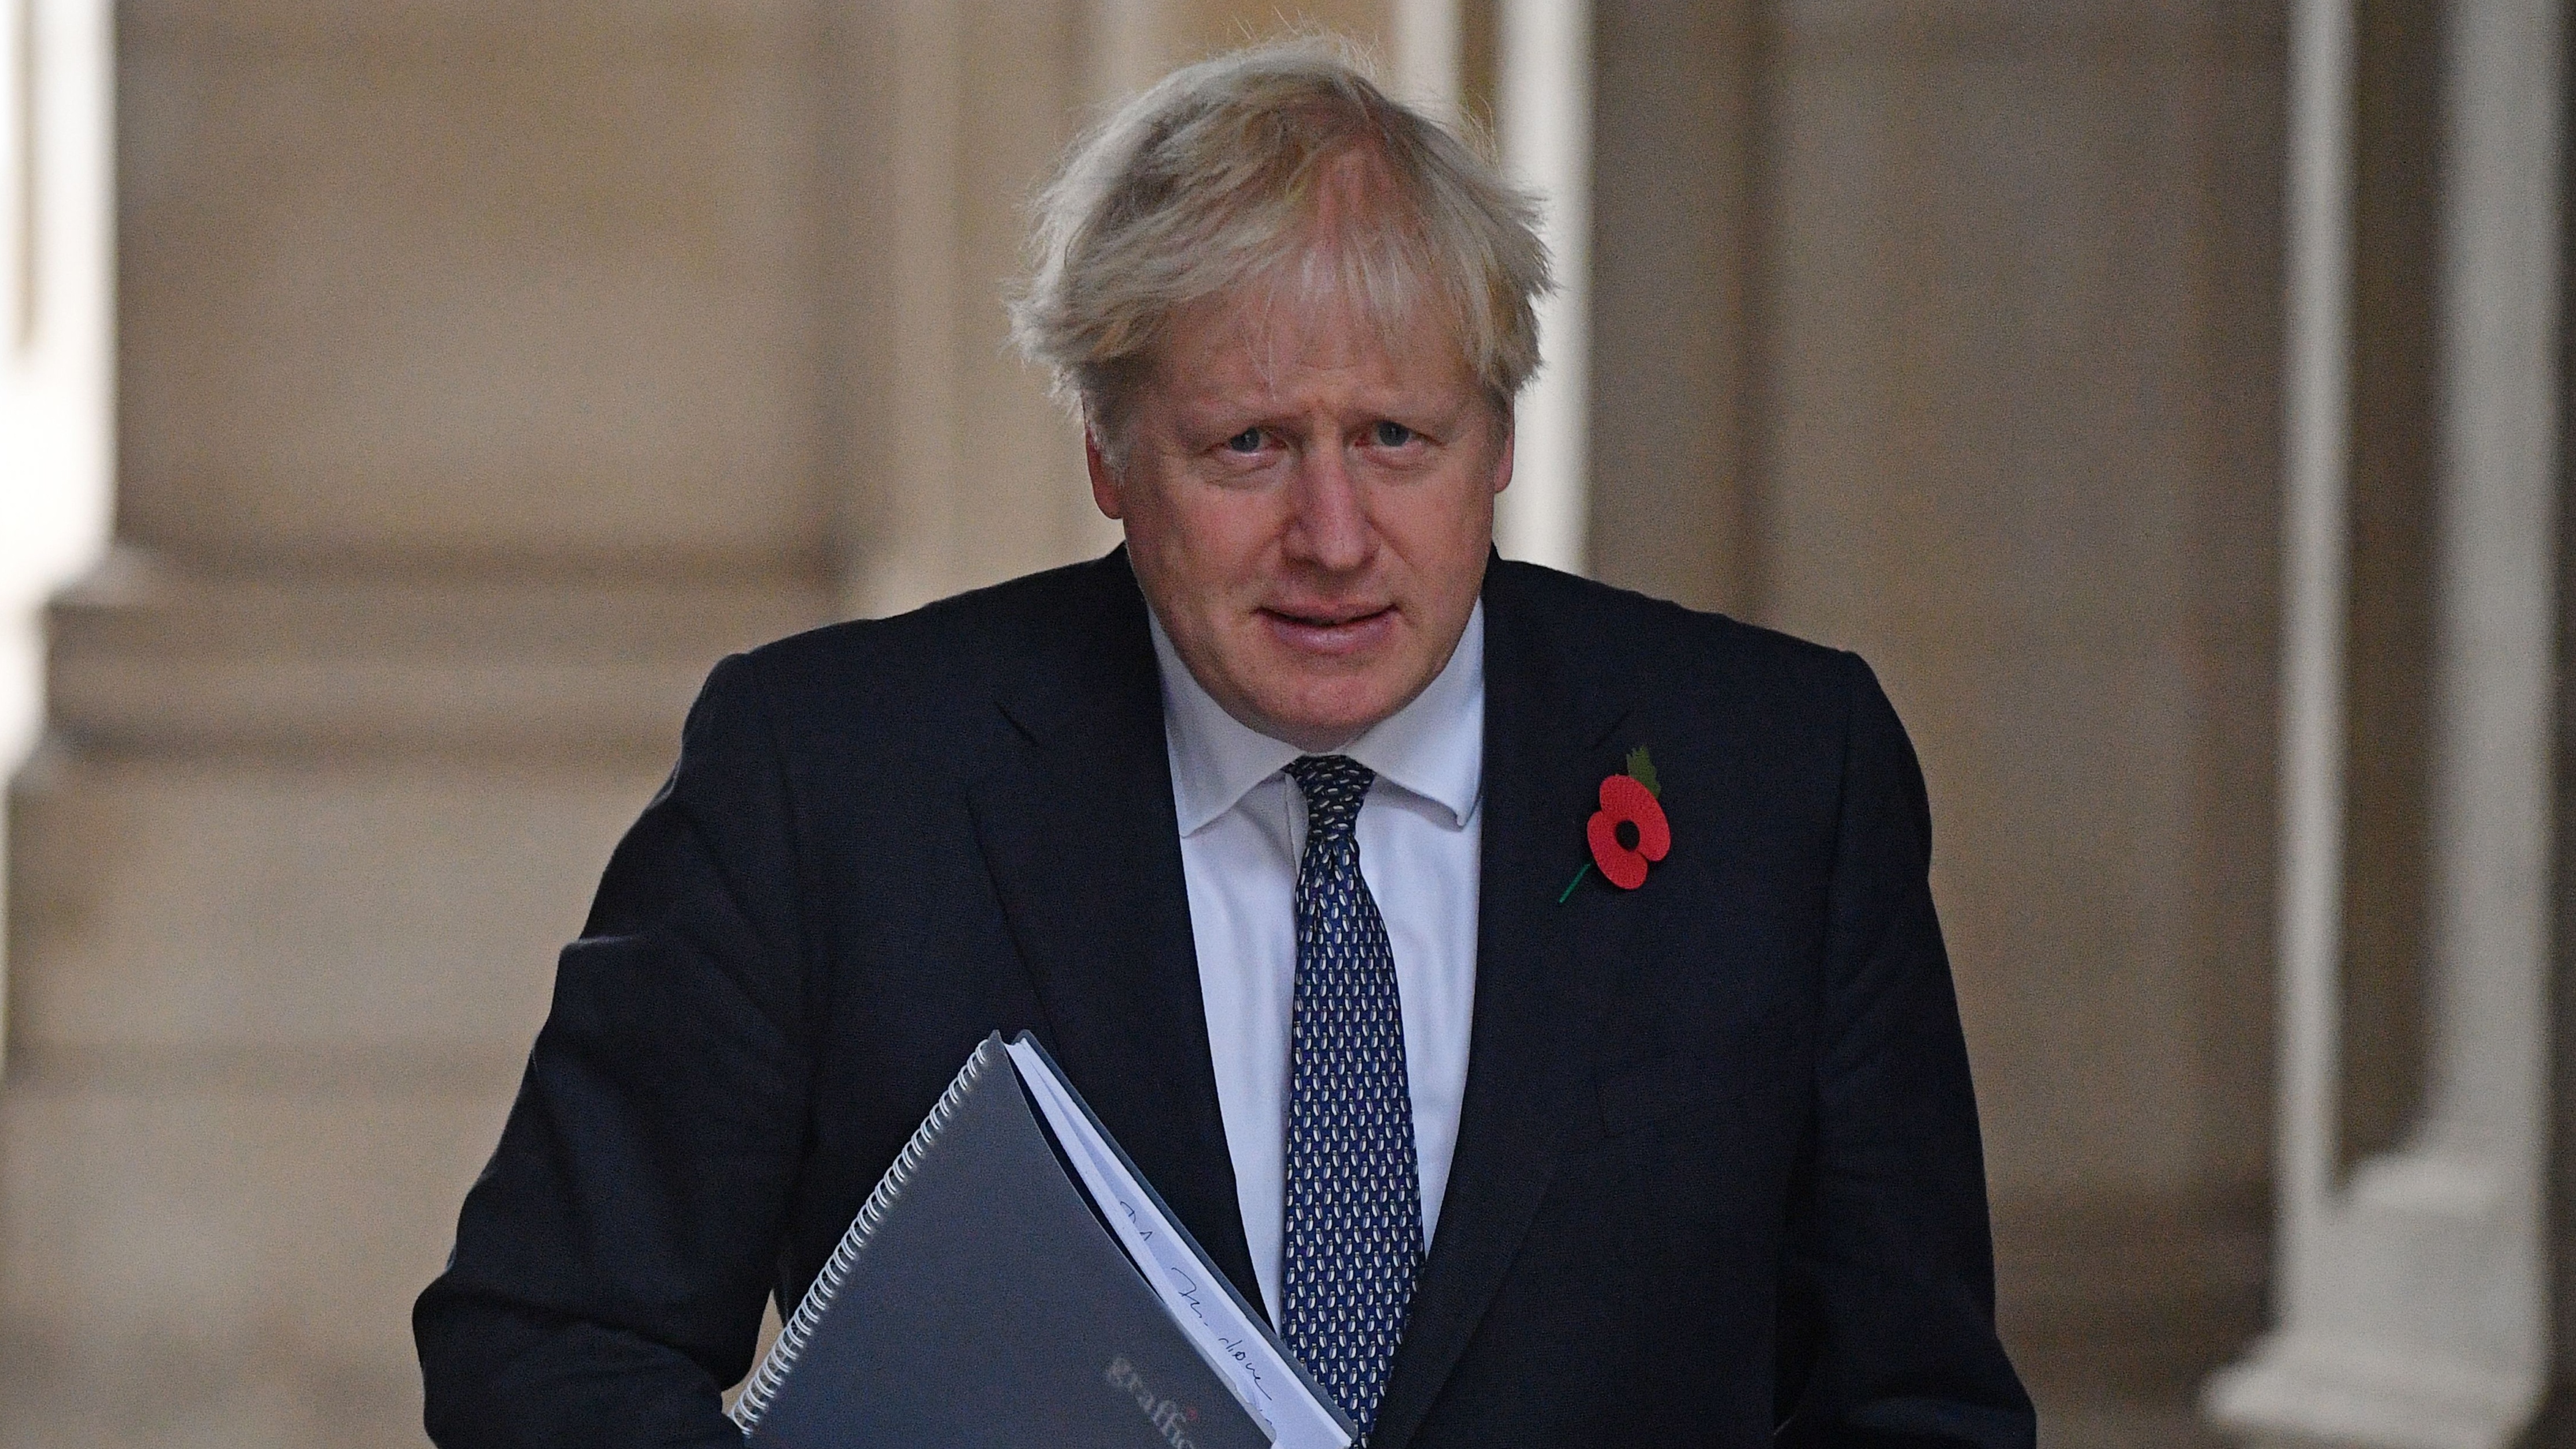 Boris Johnson arrives back at Downing Street in London.